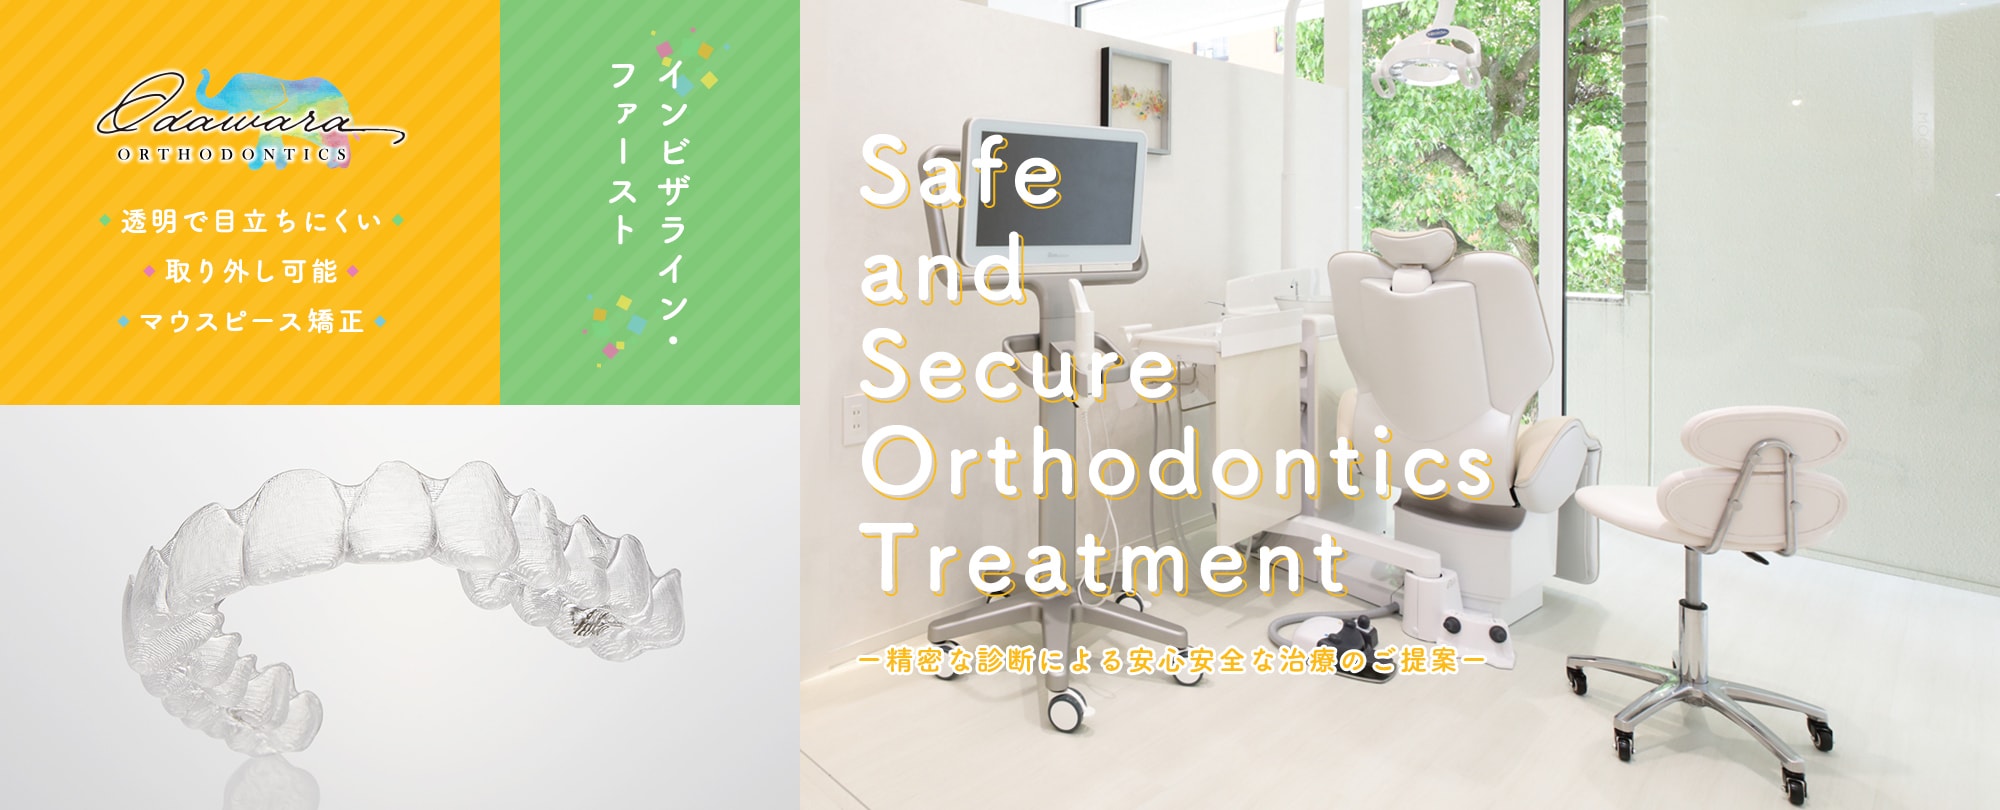 Safe and Secure Orthodontics Treatment 精密な診断による安心安全な治療のご提案